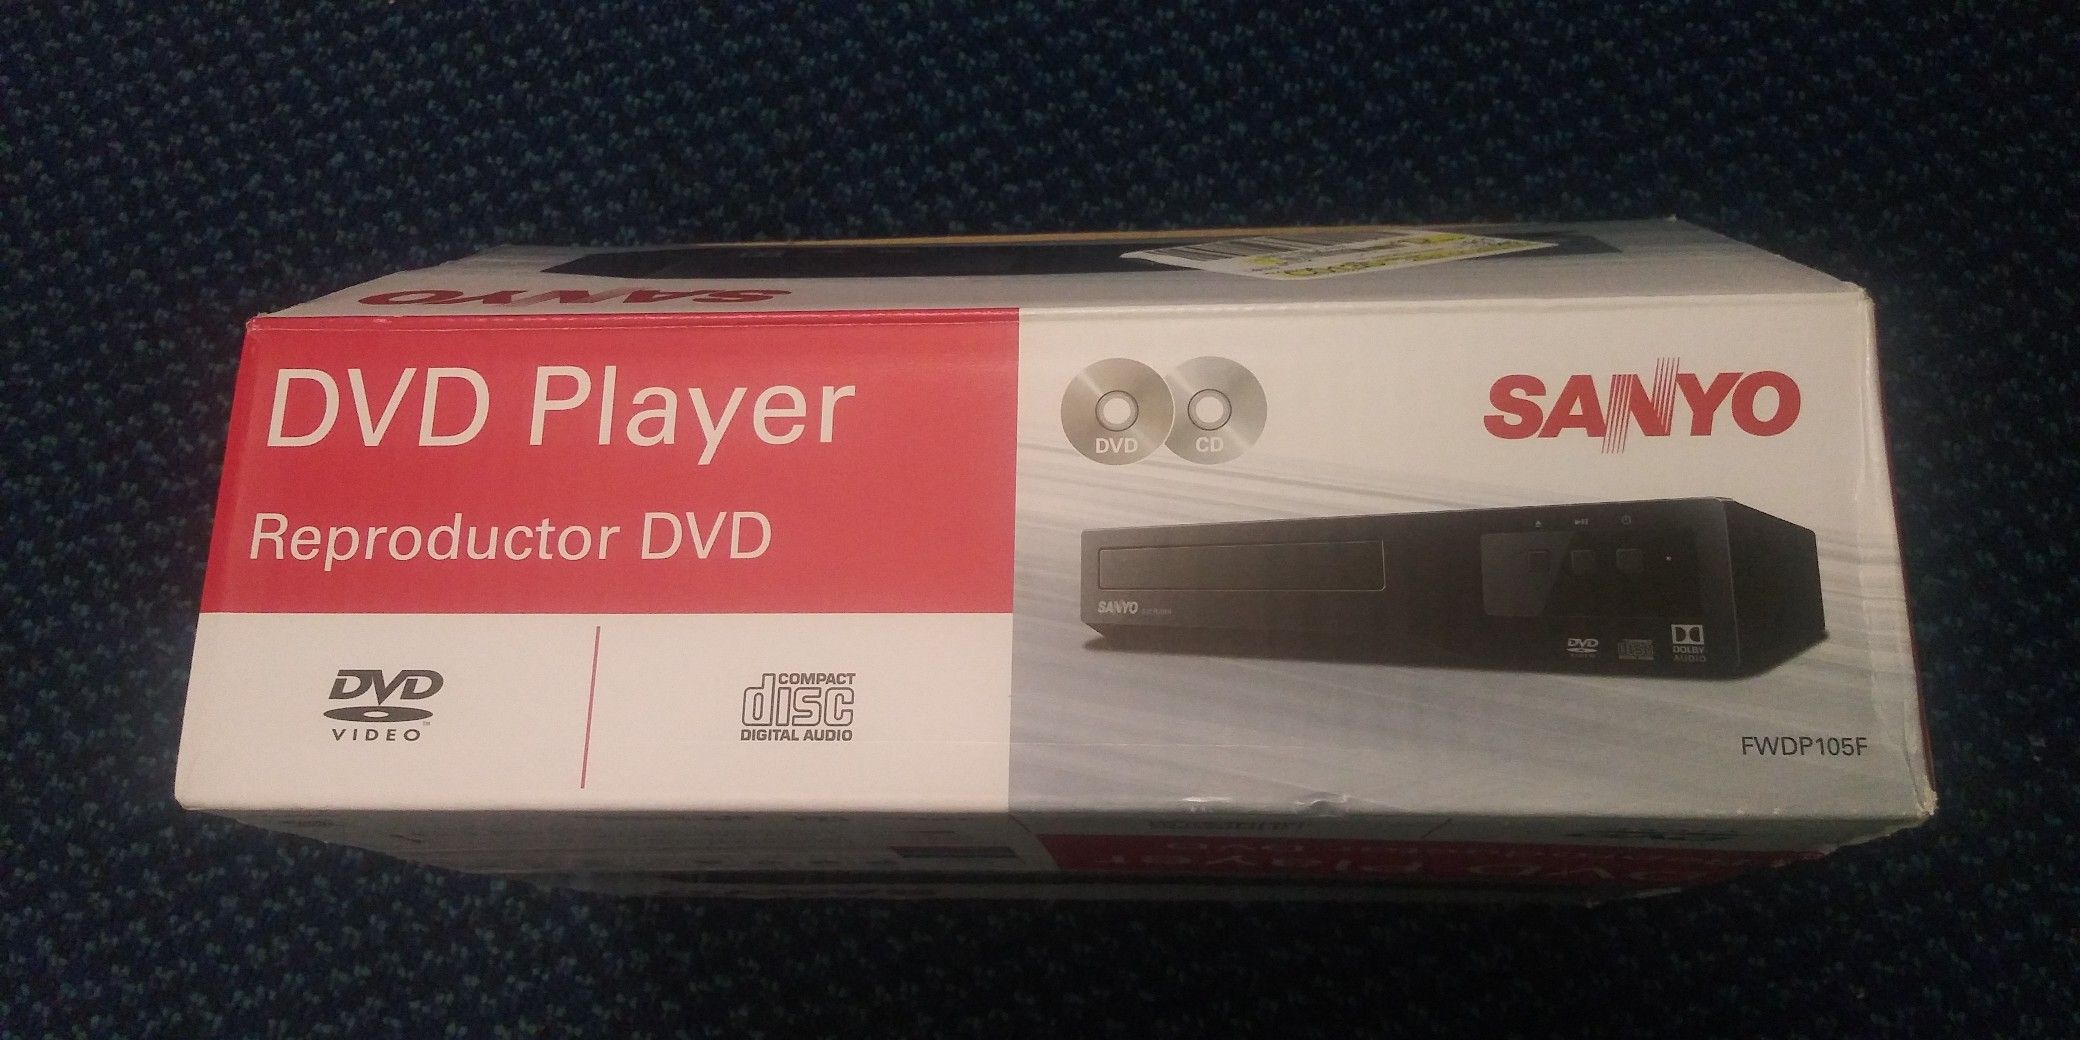 Sanyo Dvd player